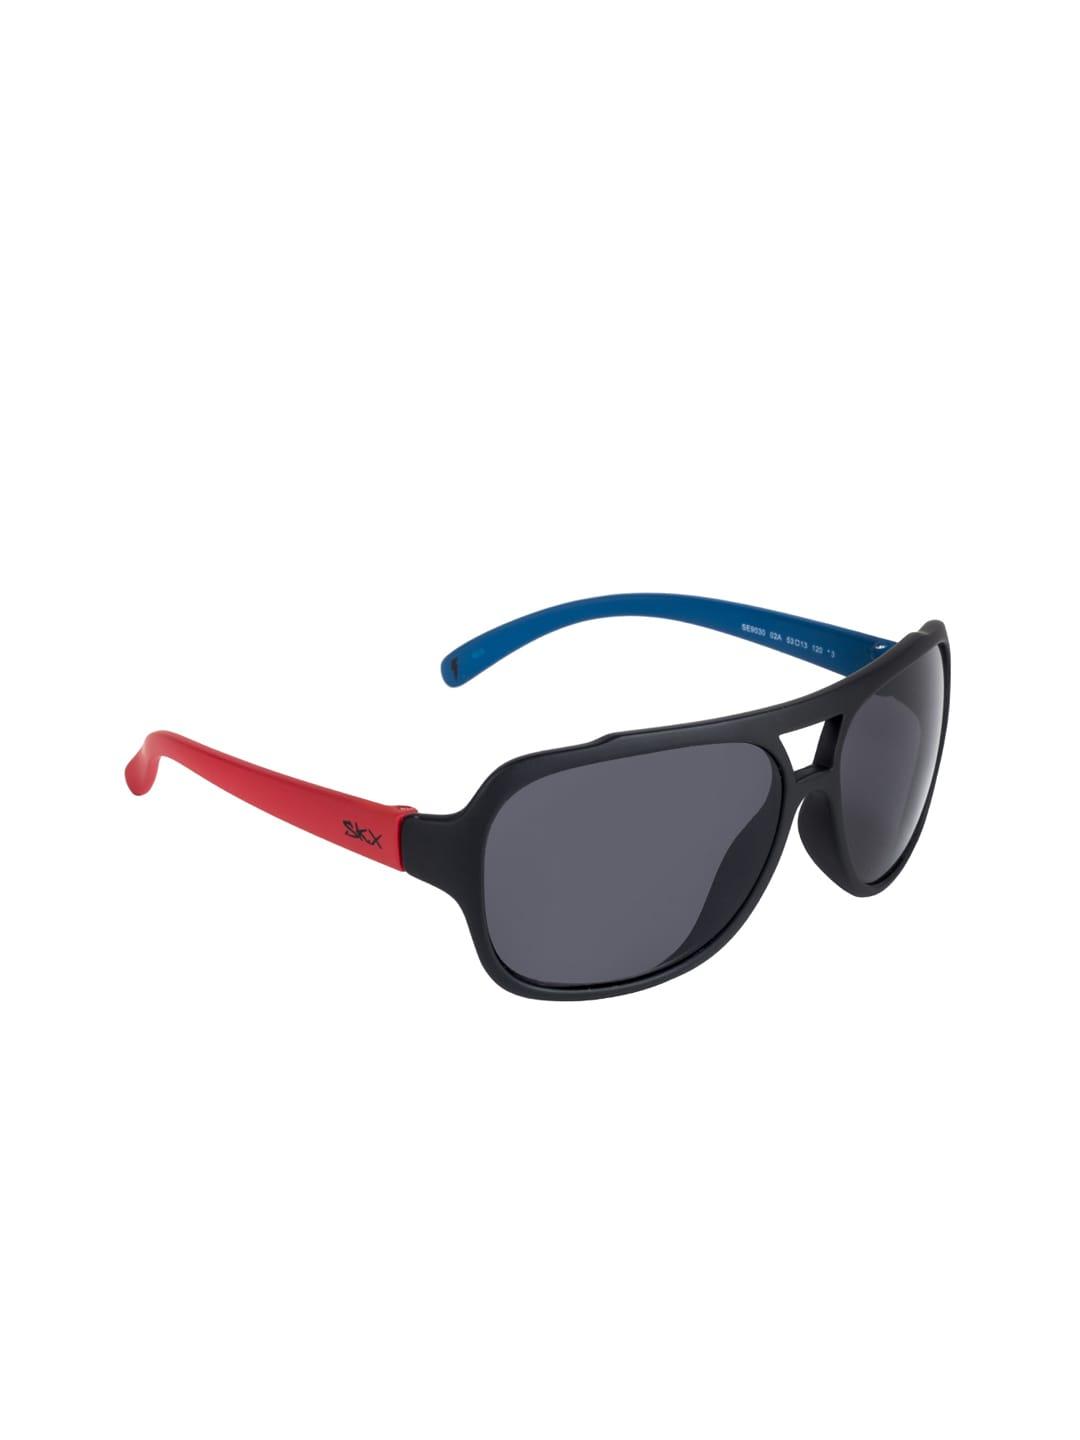 skechers-men-grey-rectangle-sunglasses-se9030-53-02a